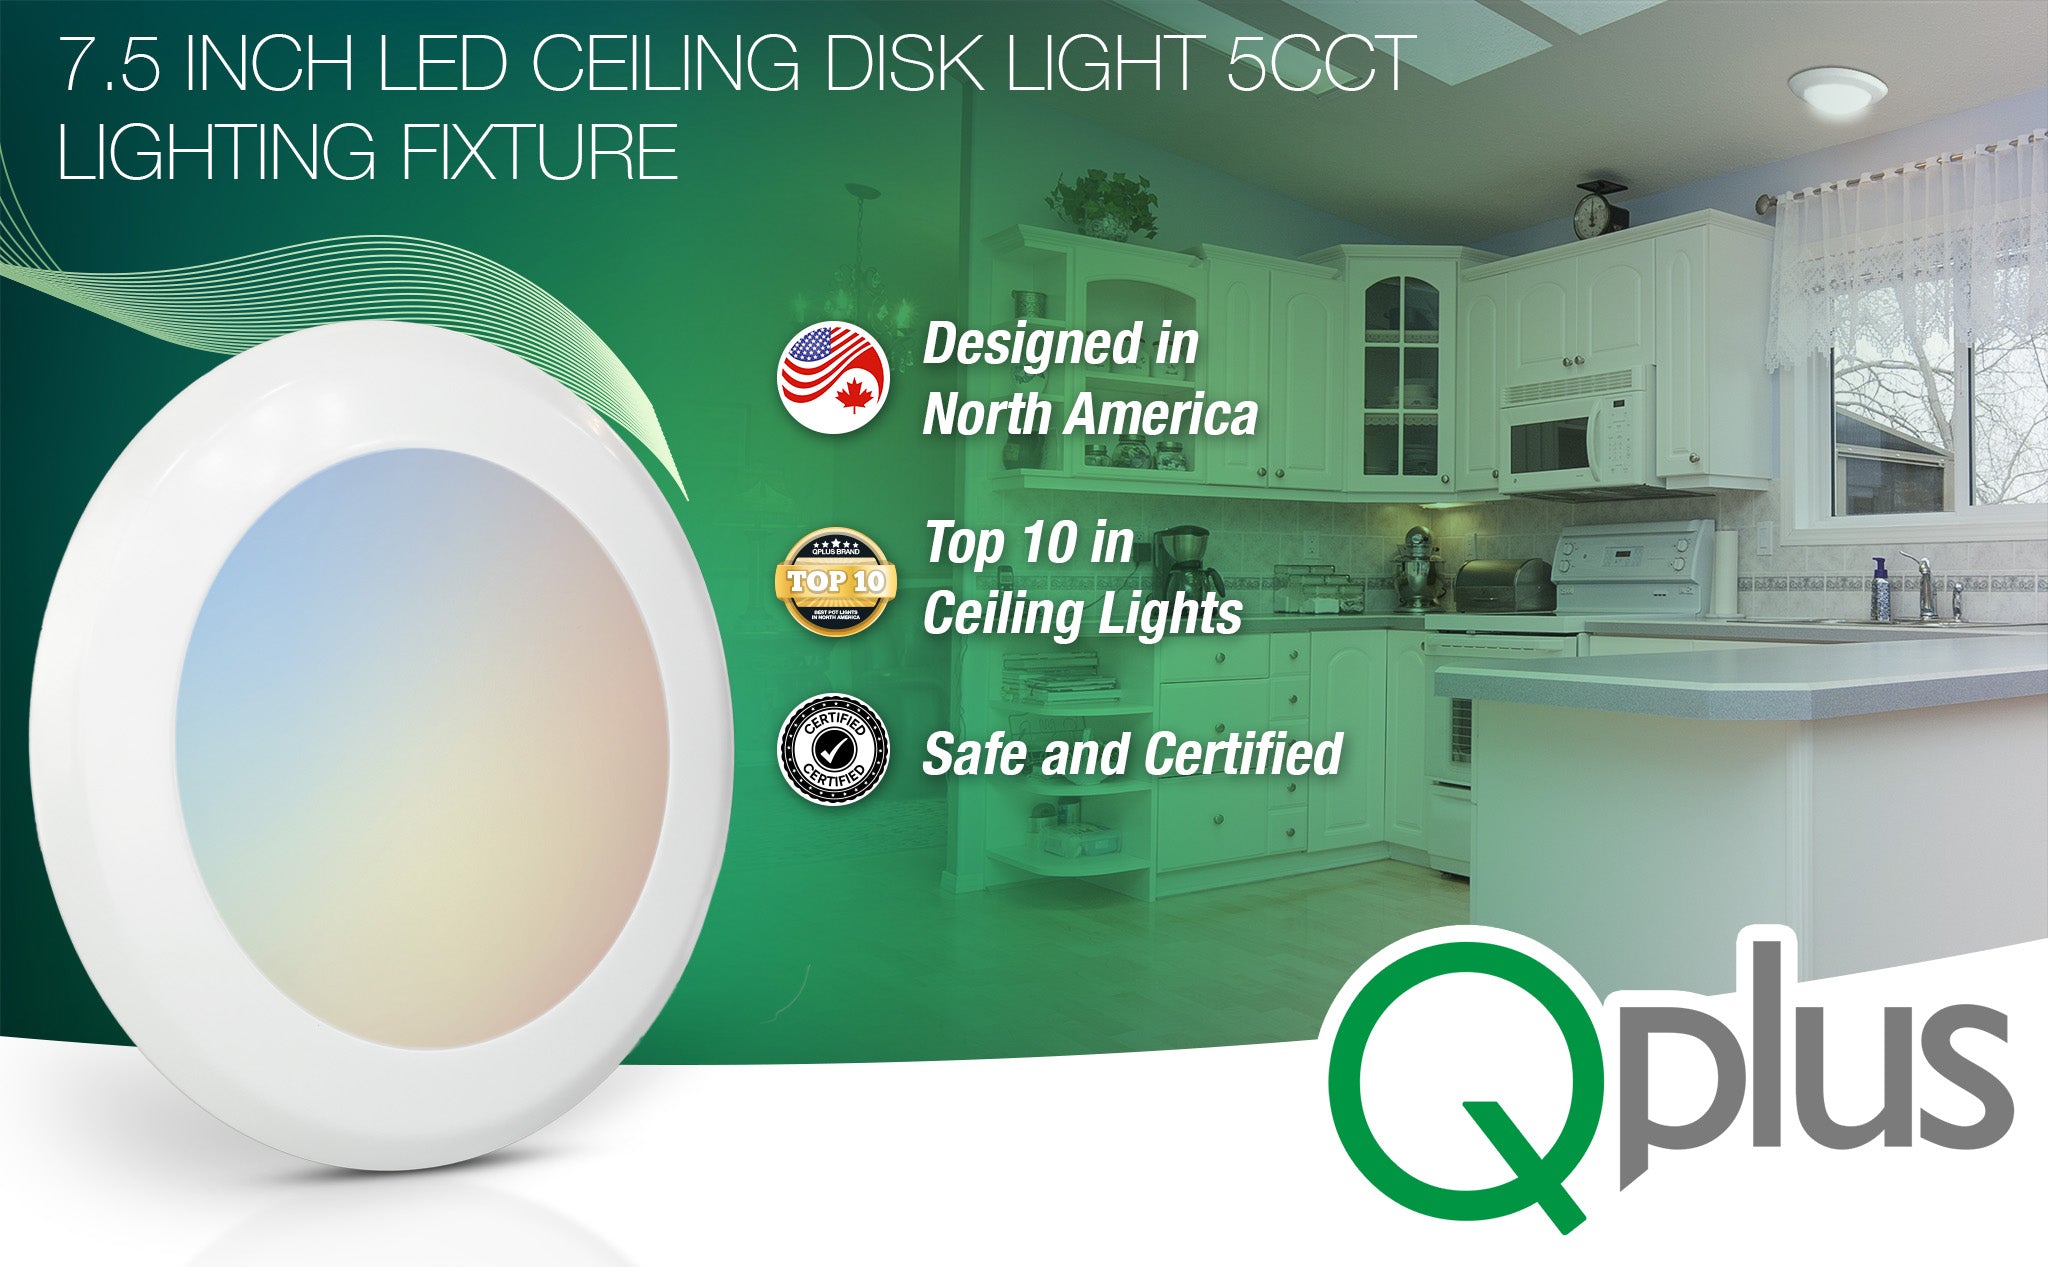 7.5 Inch LED Ceiling Disk Light 5CCT Lighting Fixture